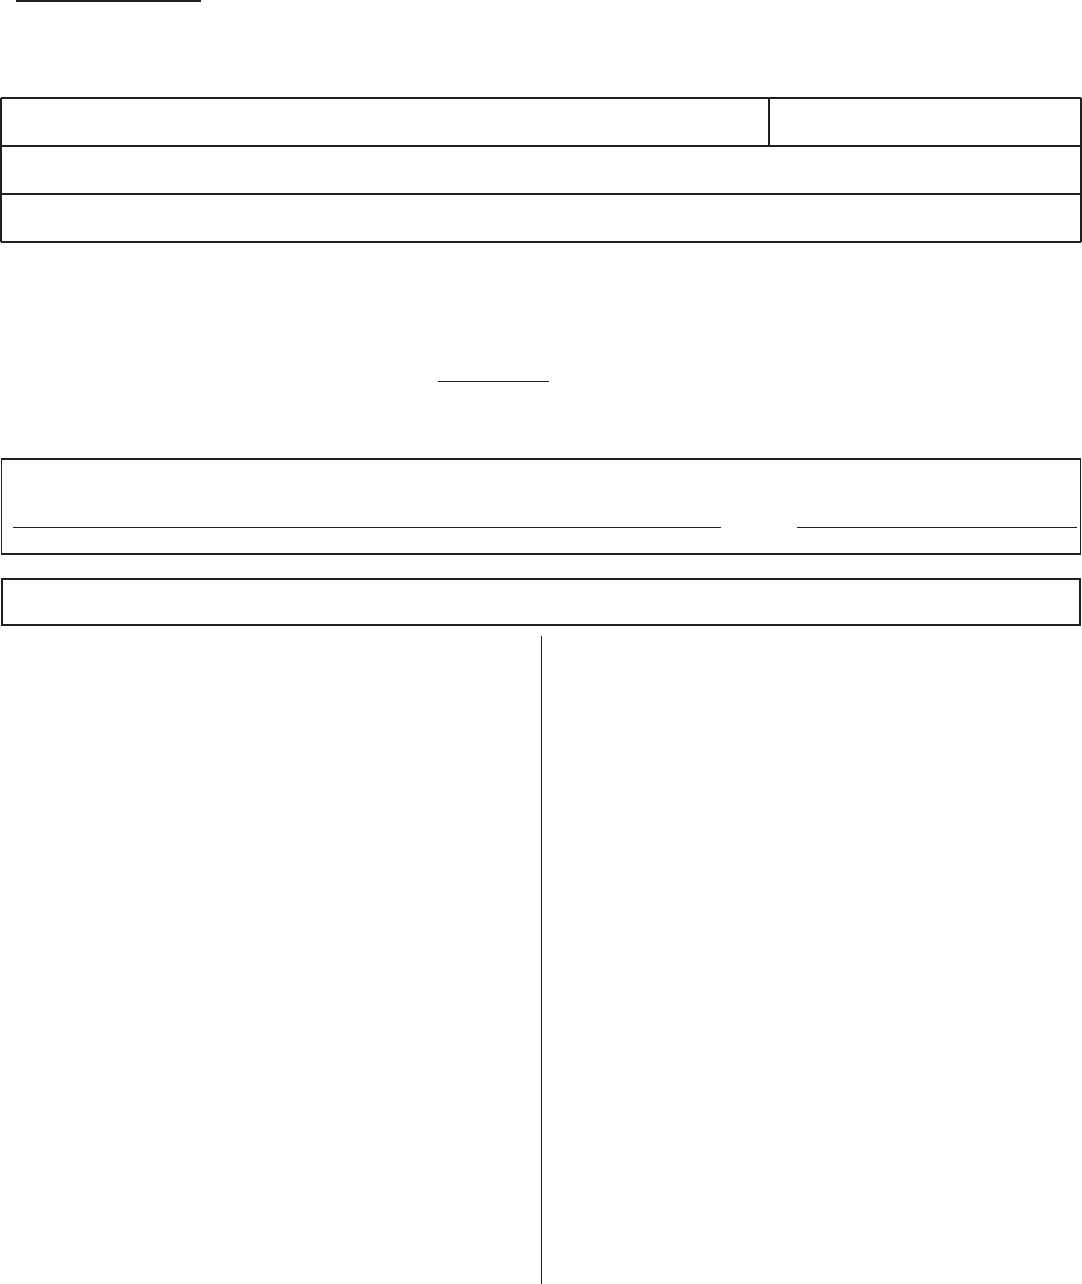 free-arizona-form-a-4-2013-pdf-30kb-1-page-s